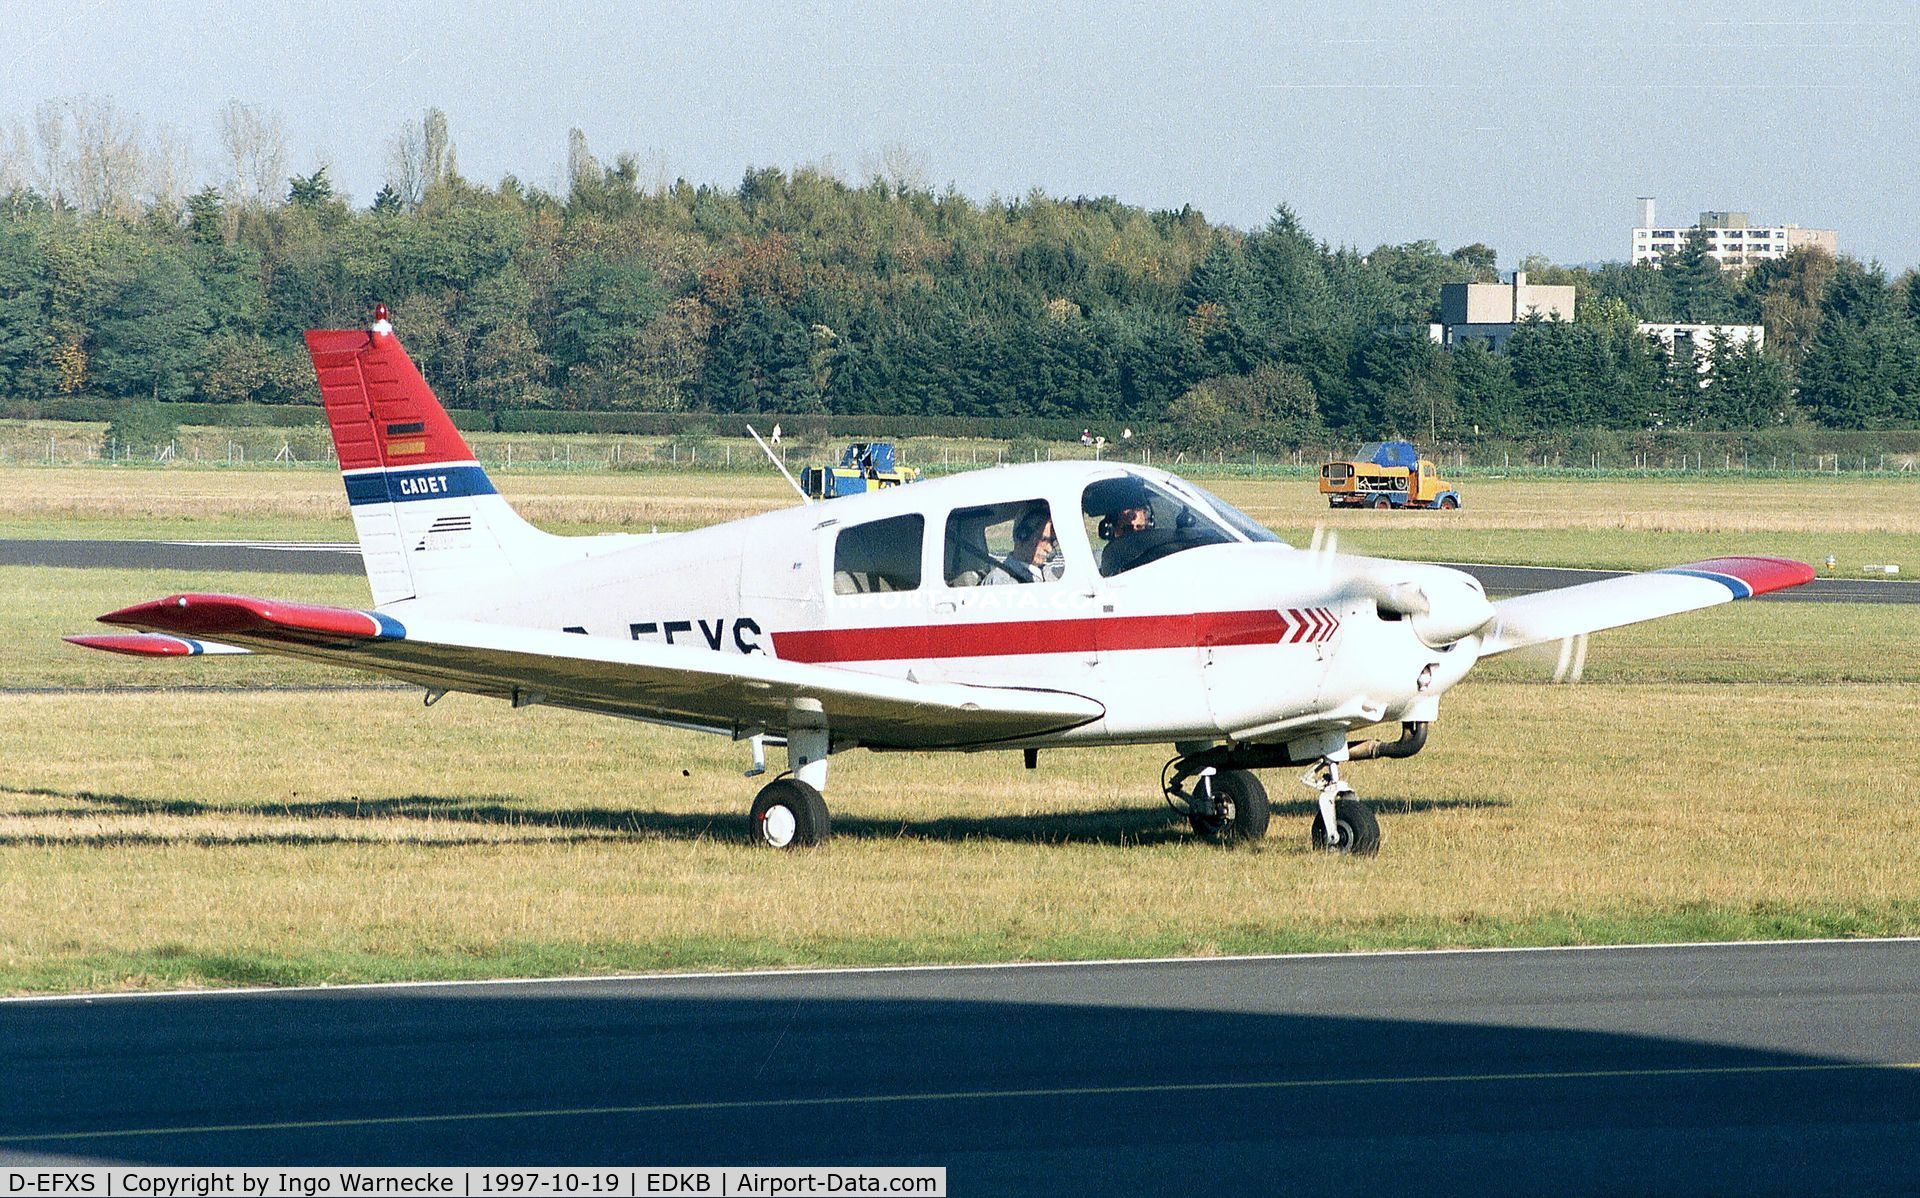 D-EFXS, Piper PA-28-161 Cadet C/N 2841243, Piper PA-28-161 Cadet at Bonn-Hangelar airfield